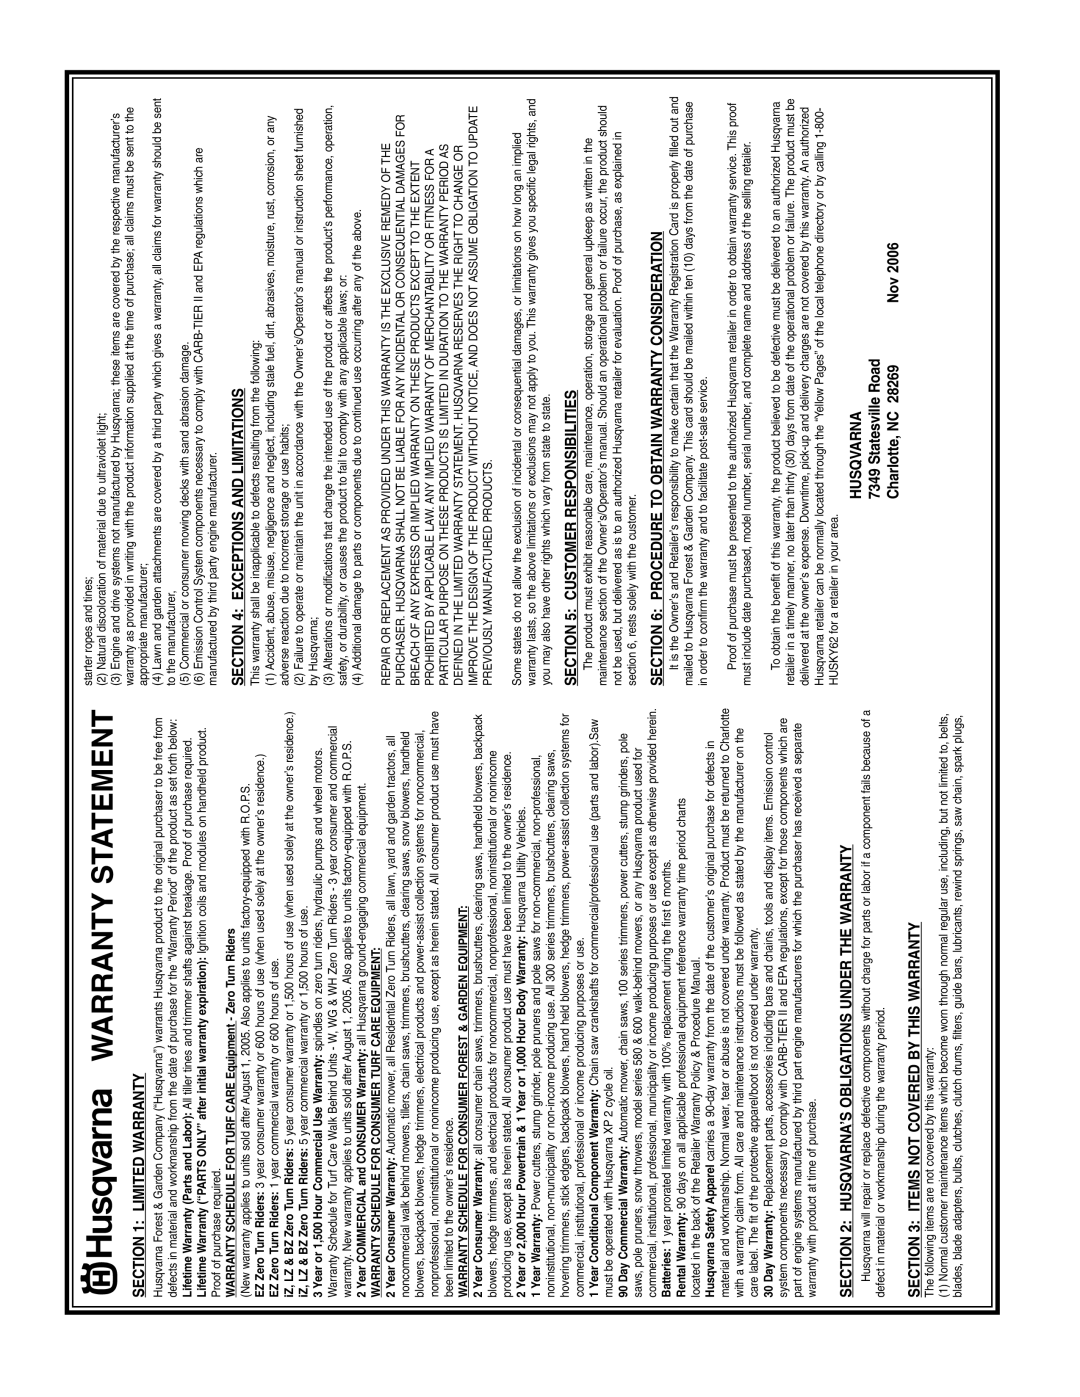 Husqvarna 6521CM Warranty Statement, Charlotte, NC, WARRANTY SCHEDULE FOR TURF CARE Equipment - Zero Turn Riders 